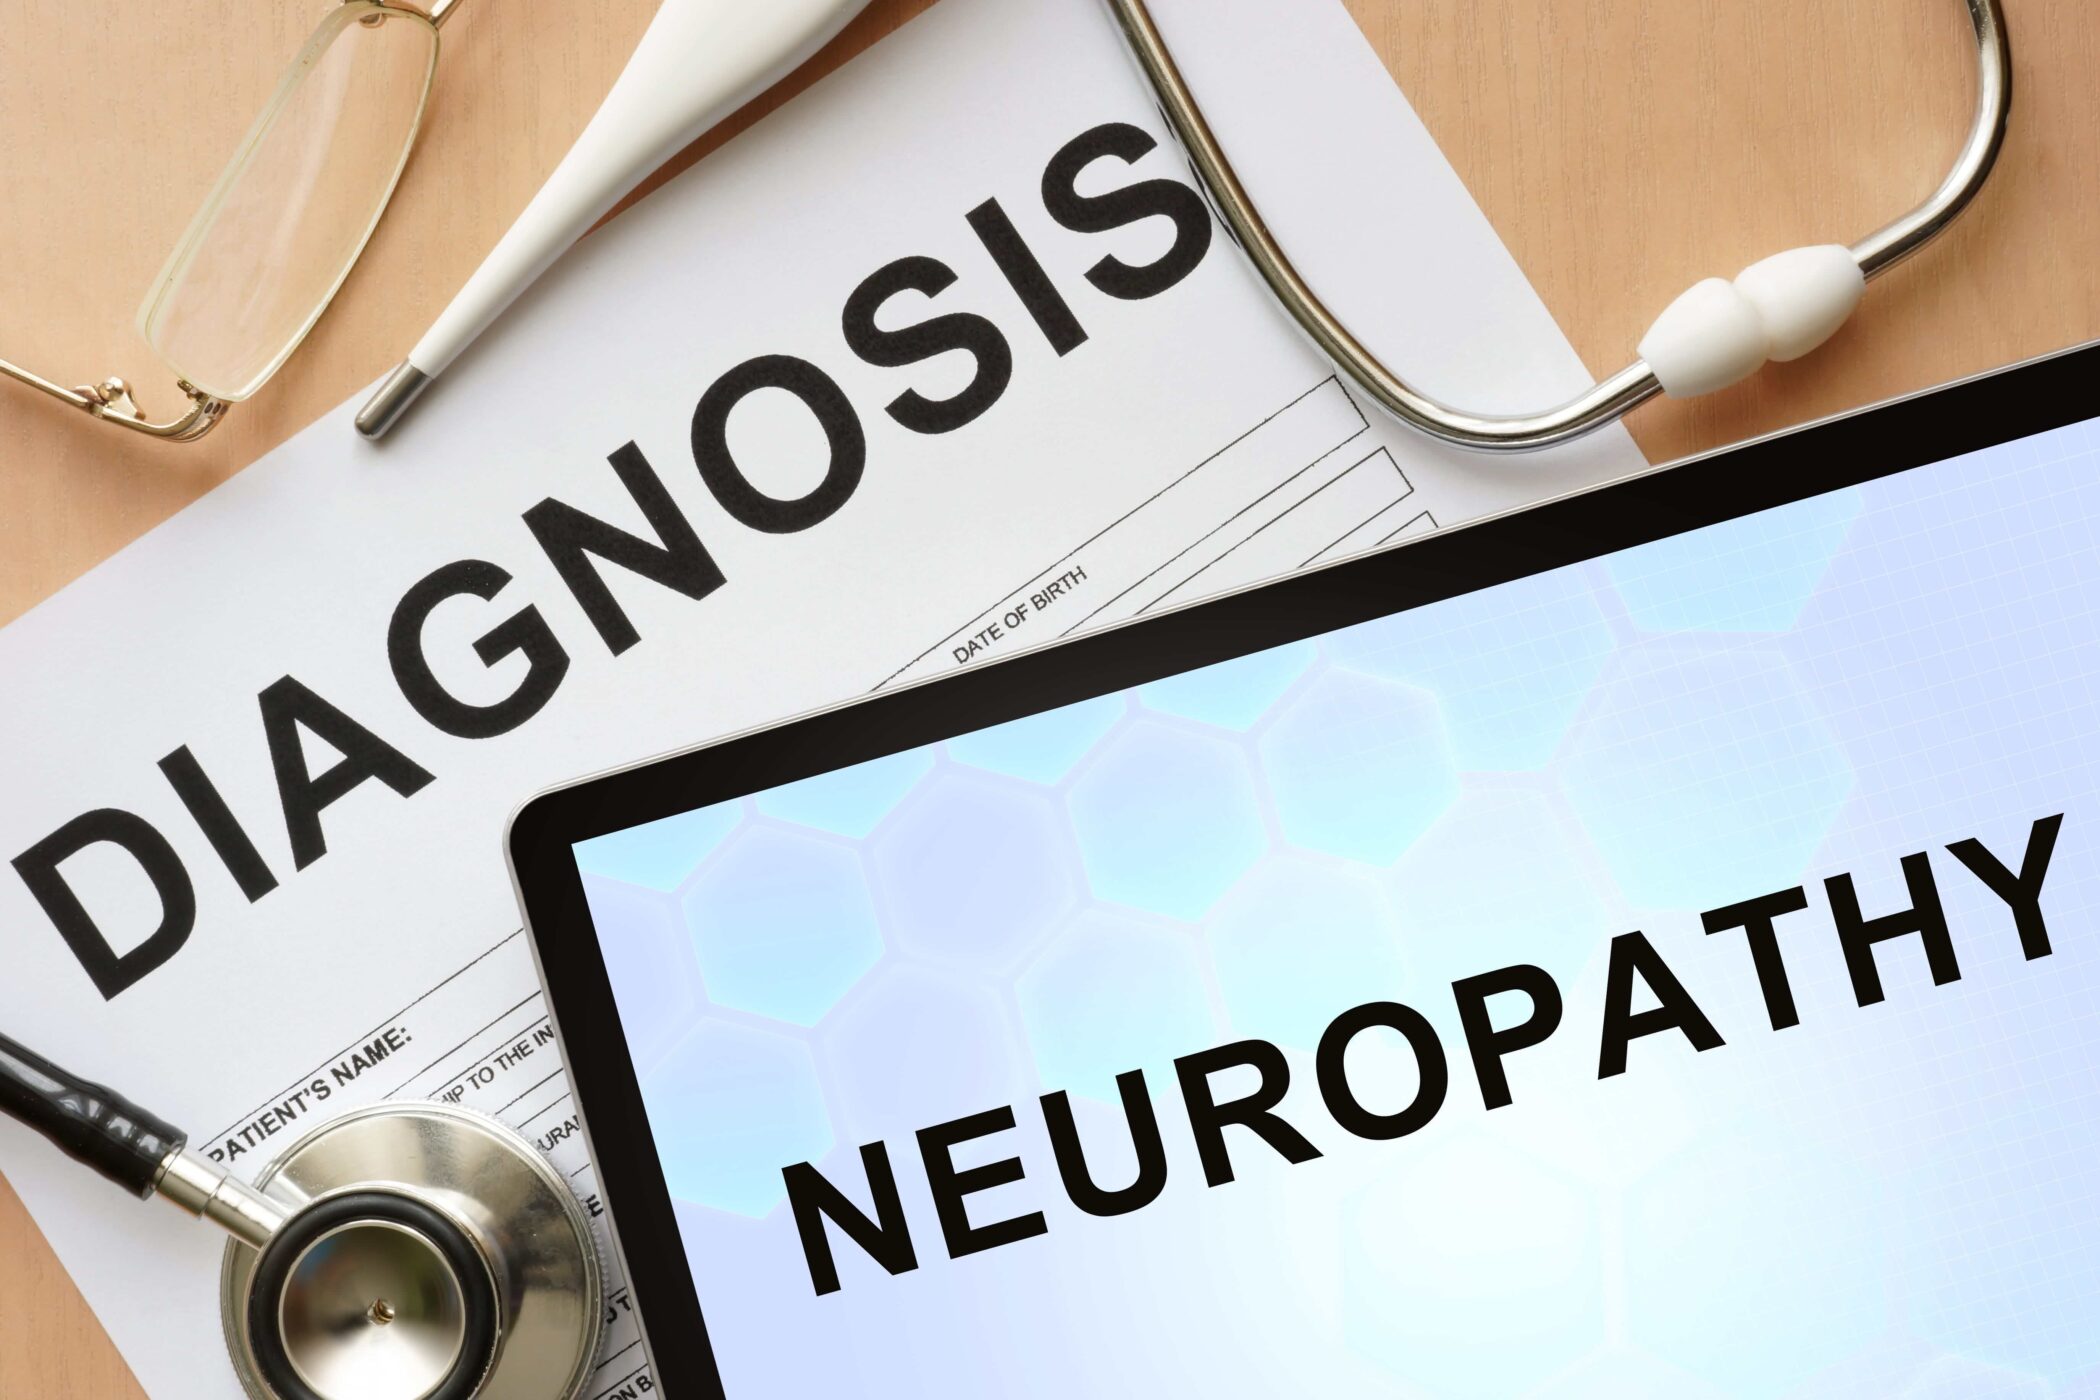 neuropathy diagnosis written on a tablet next to stethoscope